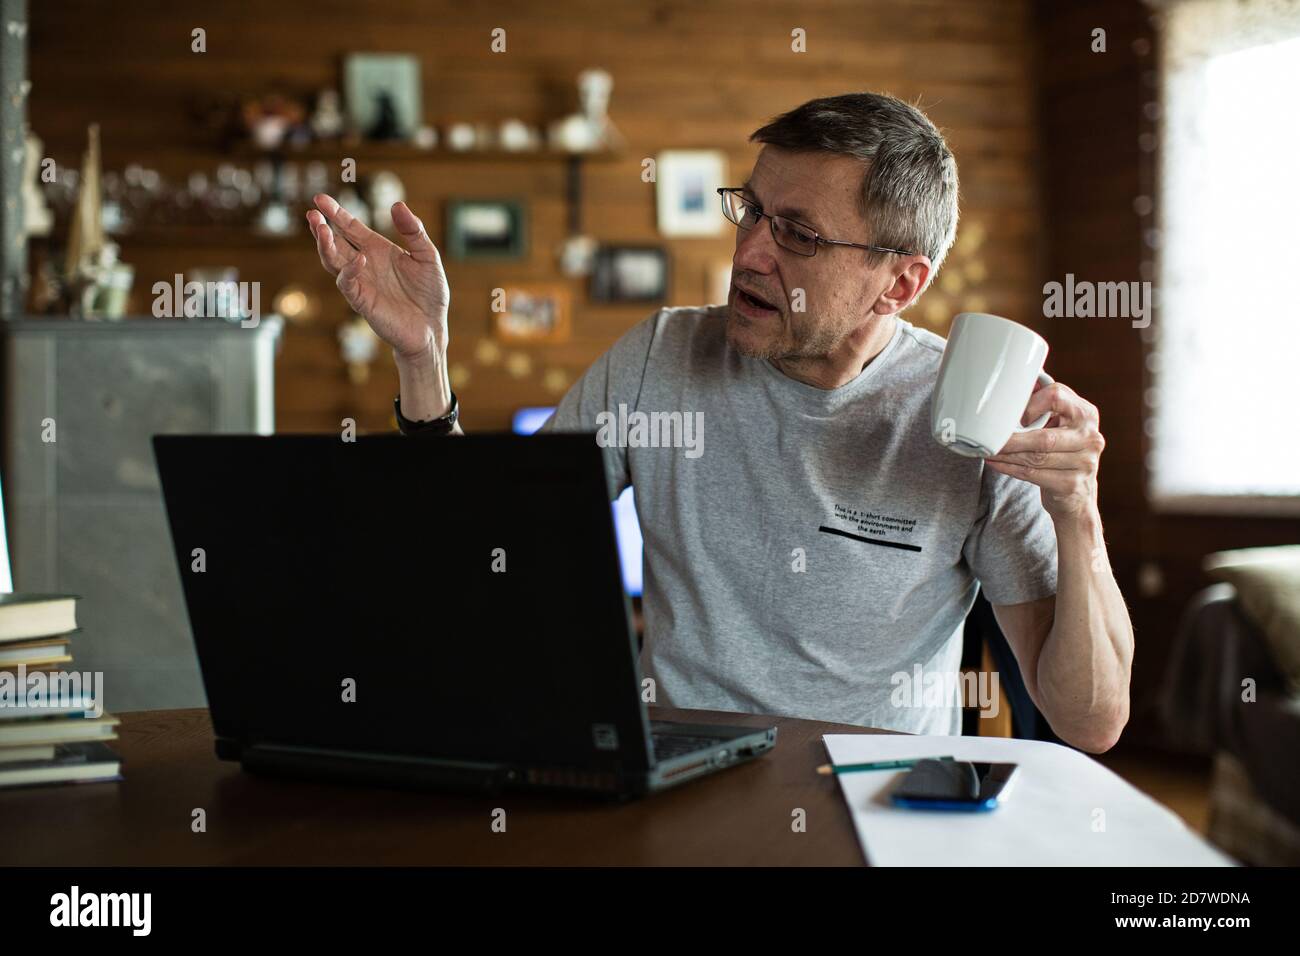 Un hombre medio adulto sosteniendo una taza discutiendo usando una videoconferencia. Foto de stock